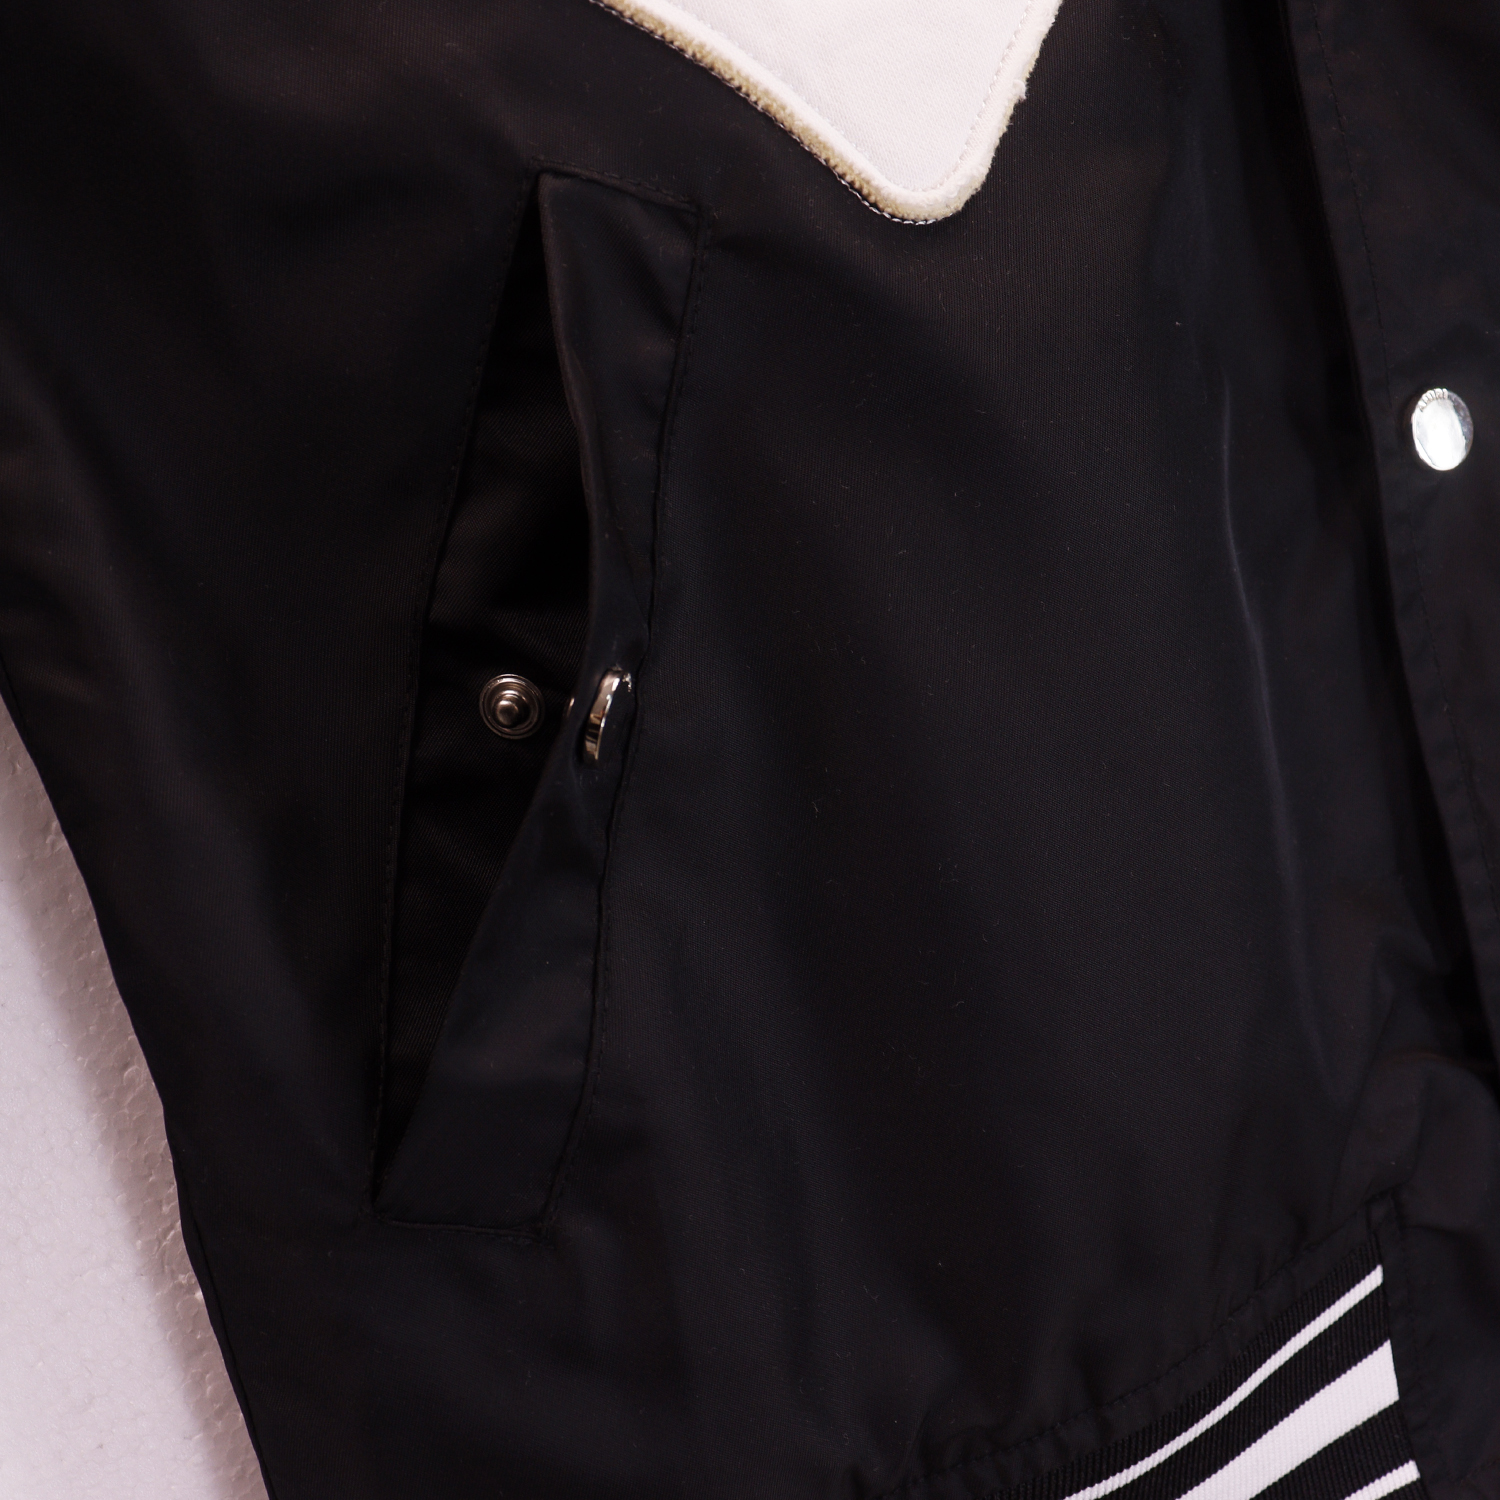 designer jacket mens coat amirris Monogrammed Applique Casual Jacket Black Loose Sweatshirt Fall and Winter Cotton Jacket